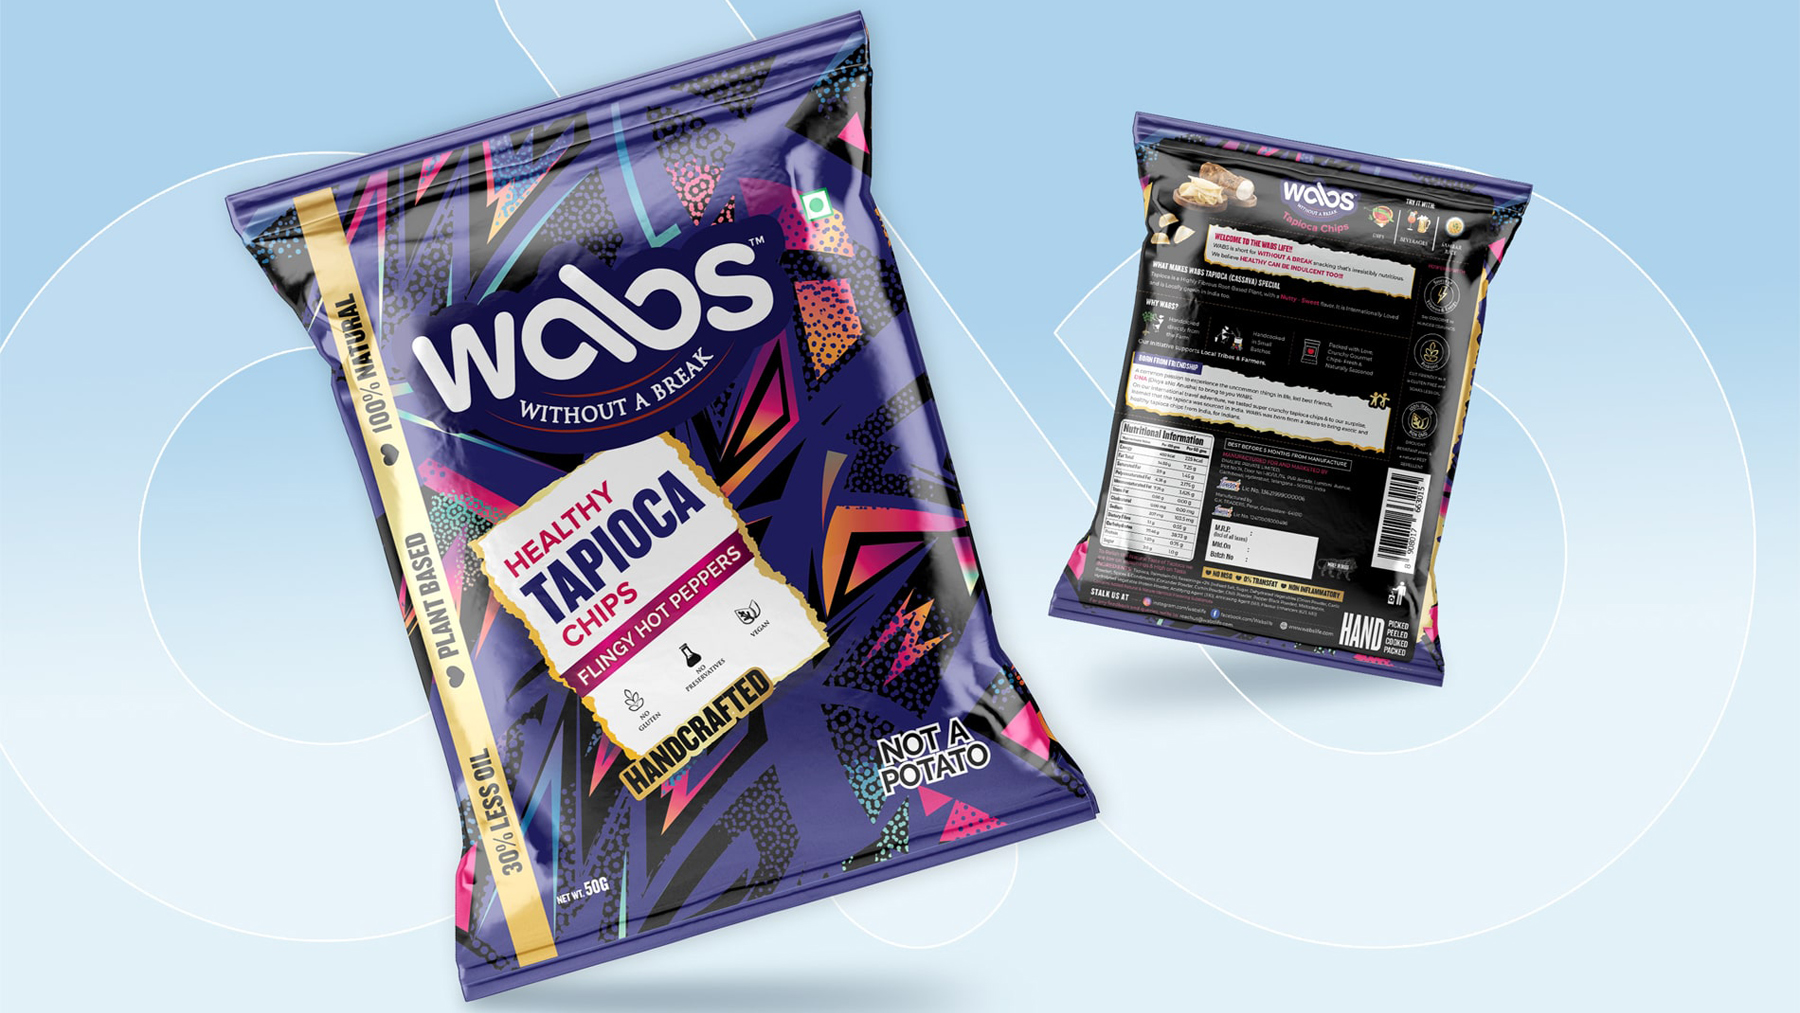 waps chips packaging design